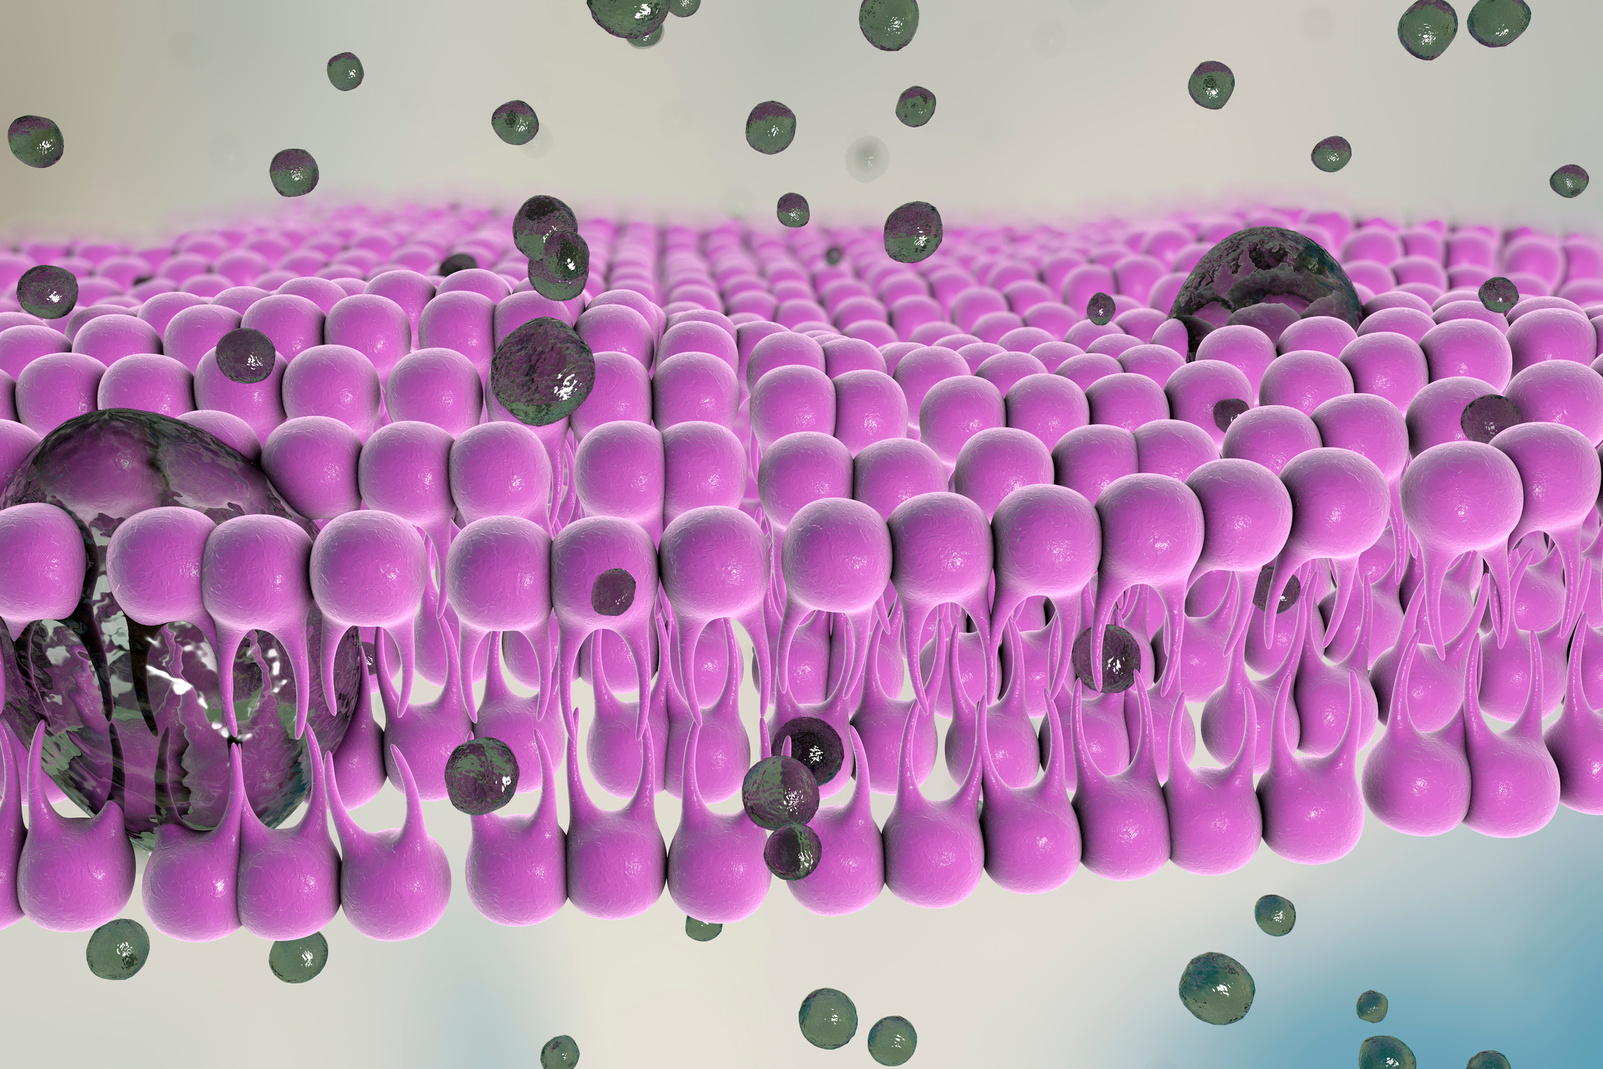 Plasma membrane. Illustration of the structure of the plasma membrane that encloses cells. The membrane is a bilayer of phospholipids.